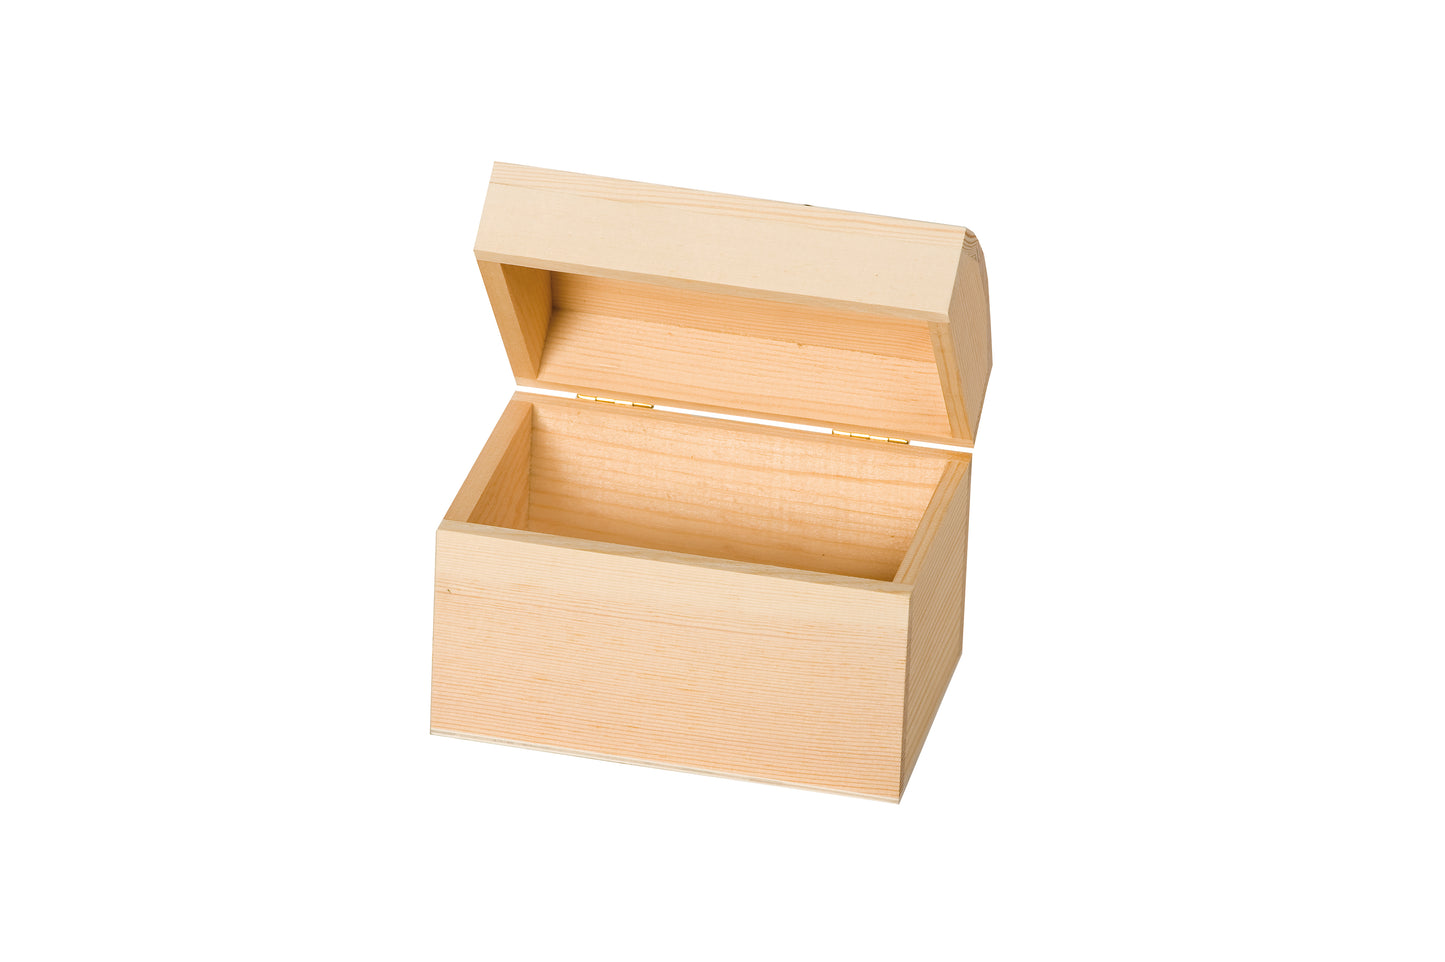 Artemio wooden box Code VICB03